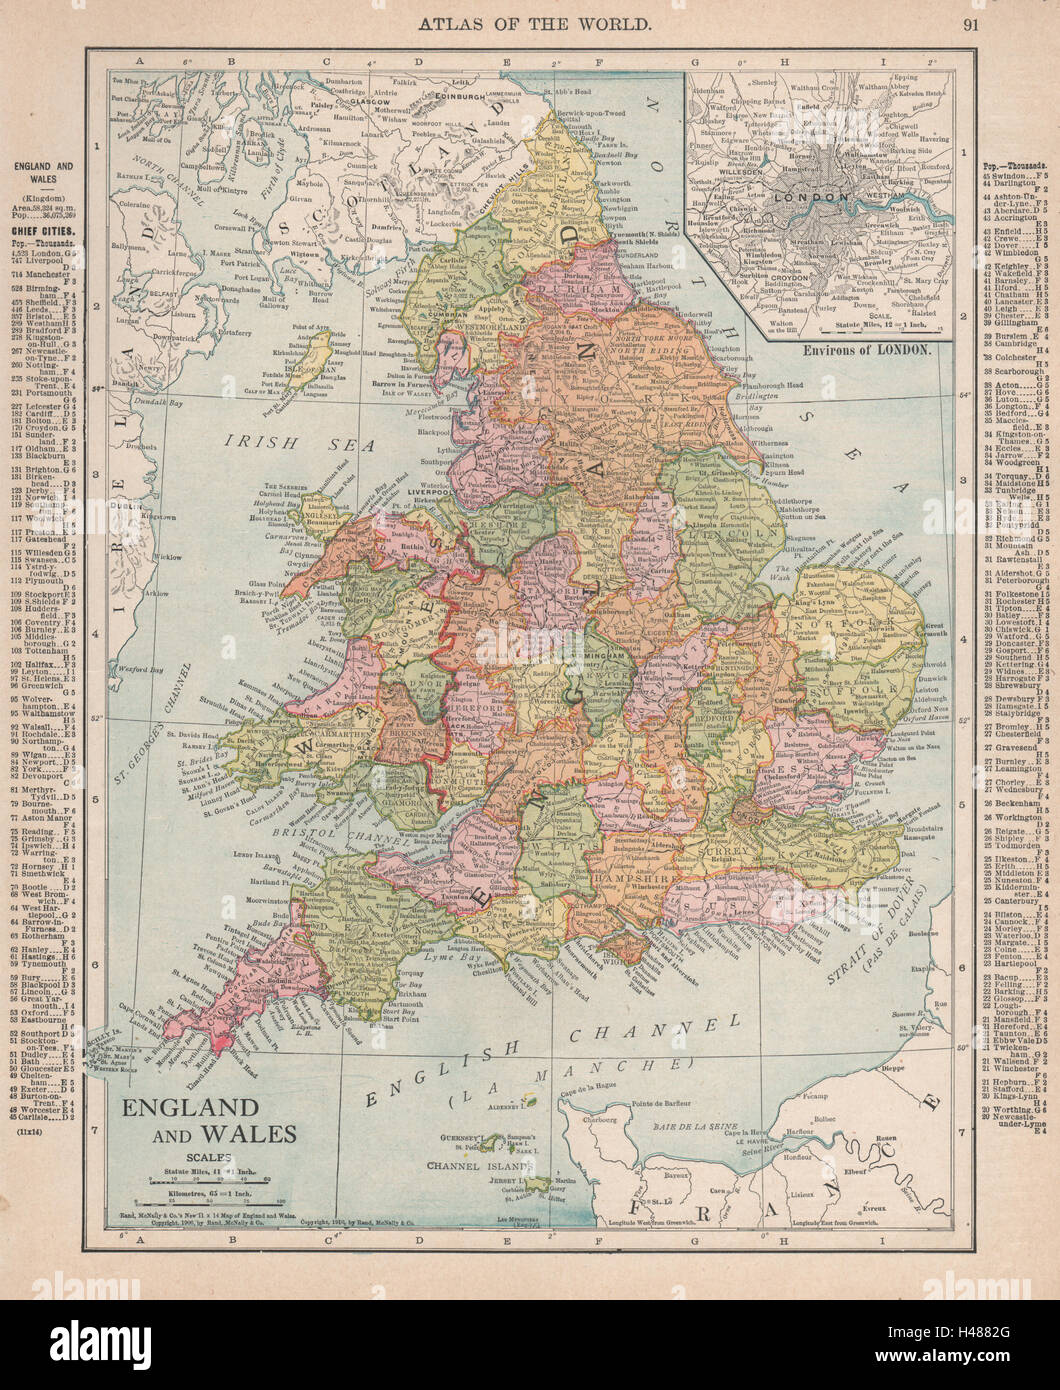 England and Wales. London environs. Great Britain. RAND MCNALLY 1912 old map Stock Photo